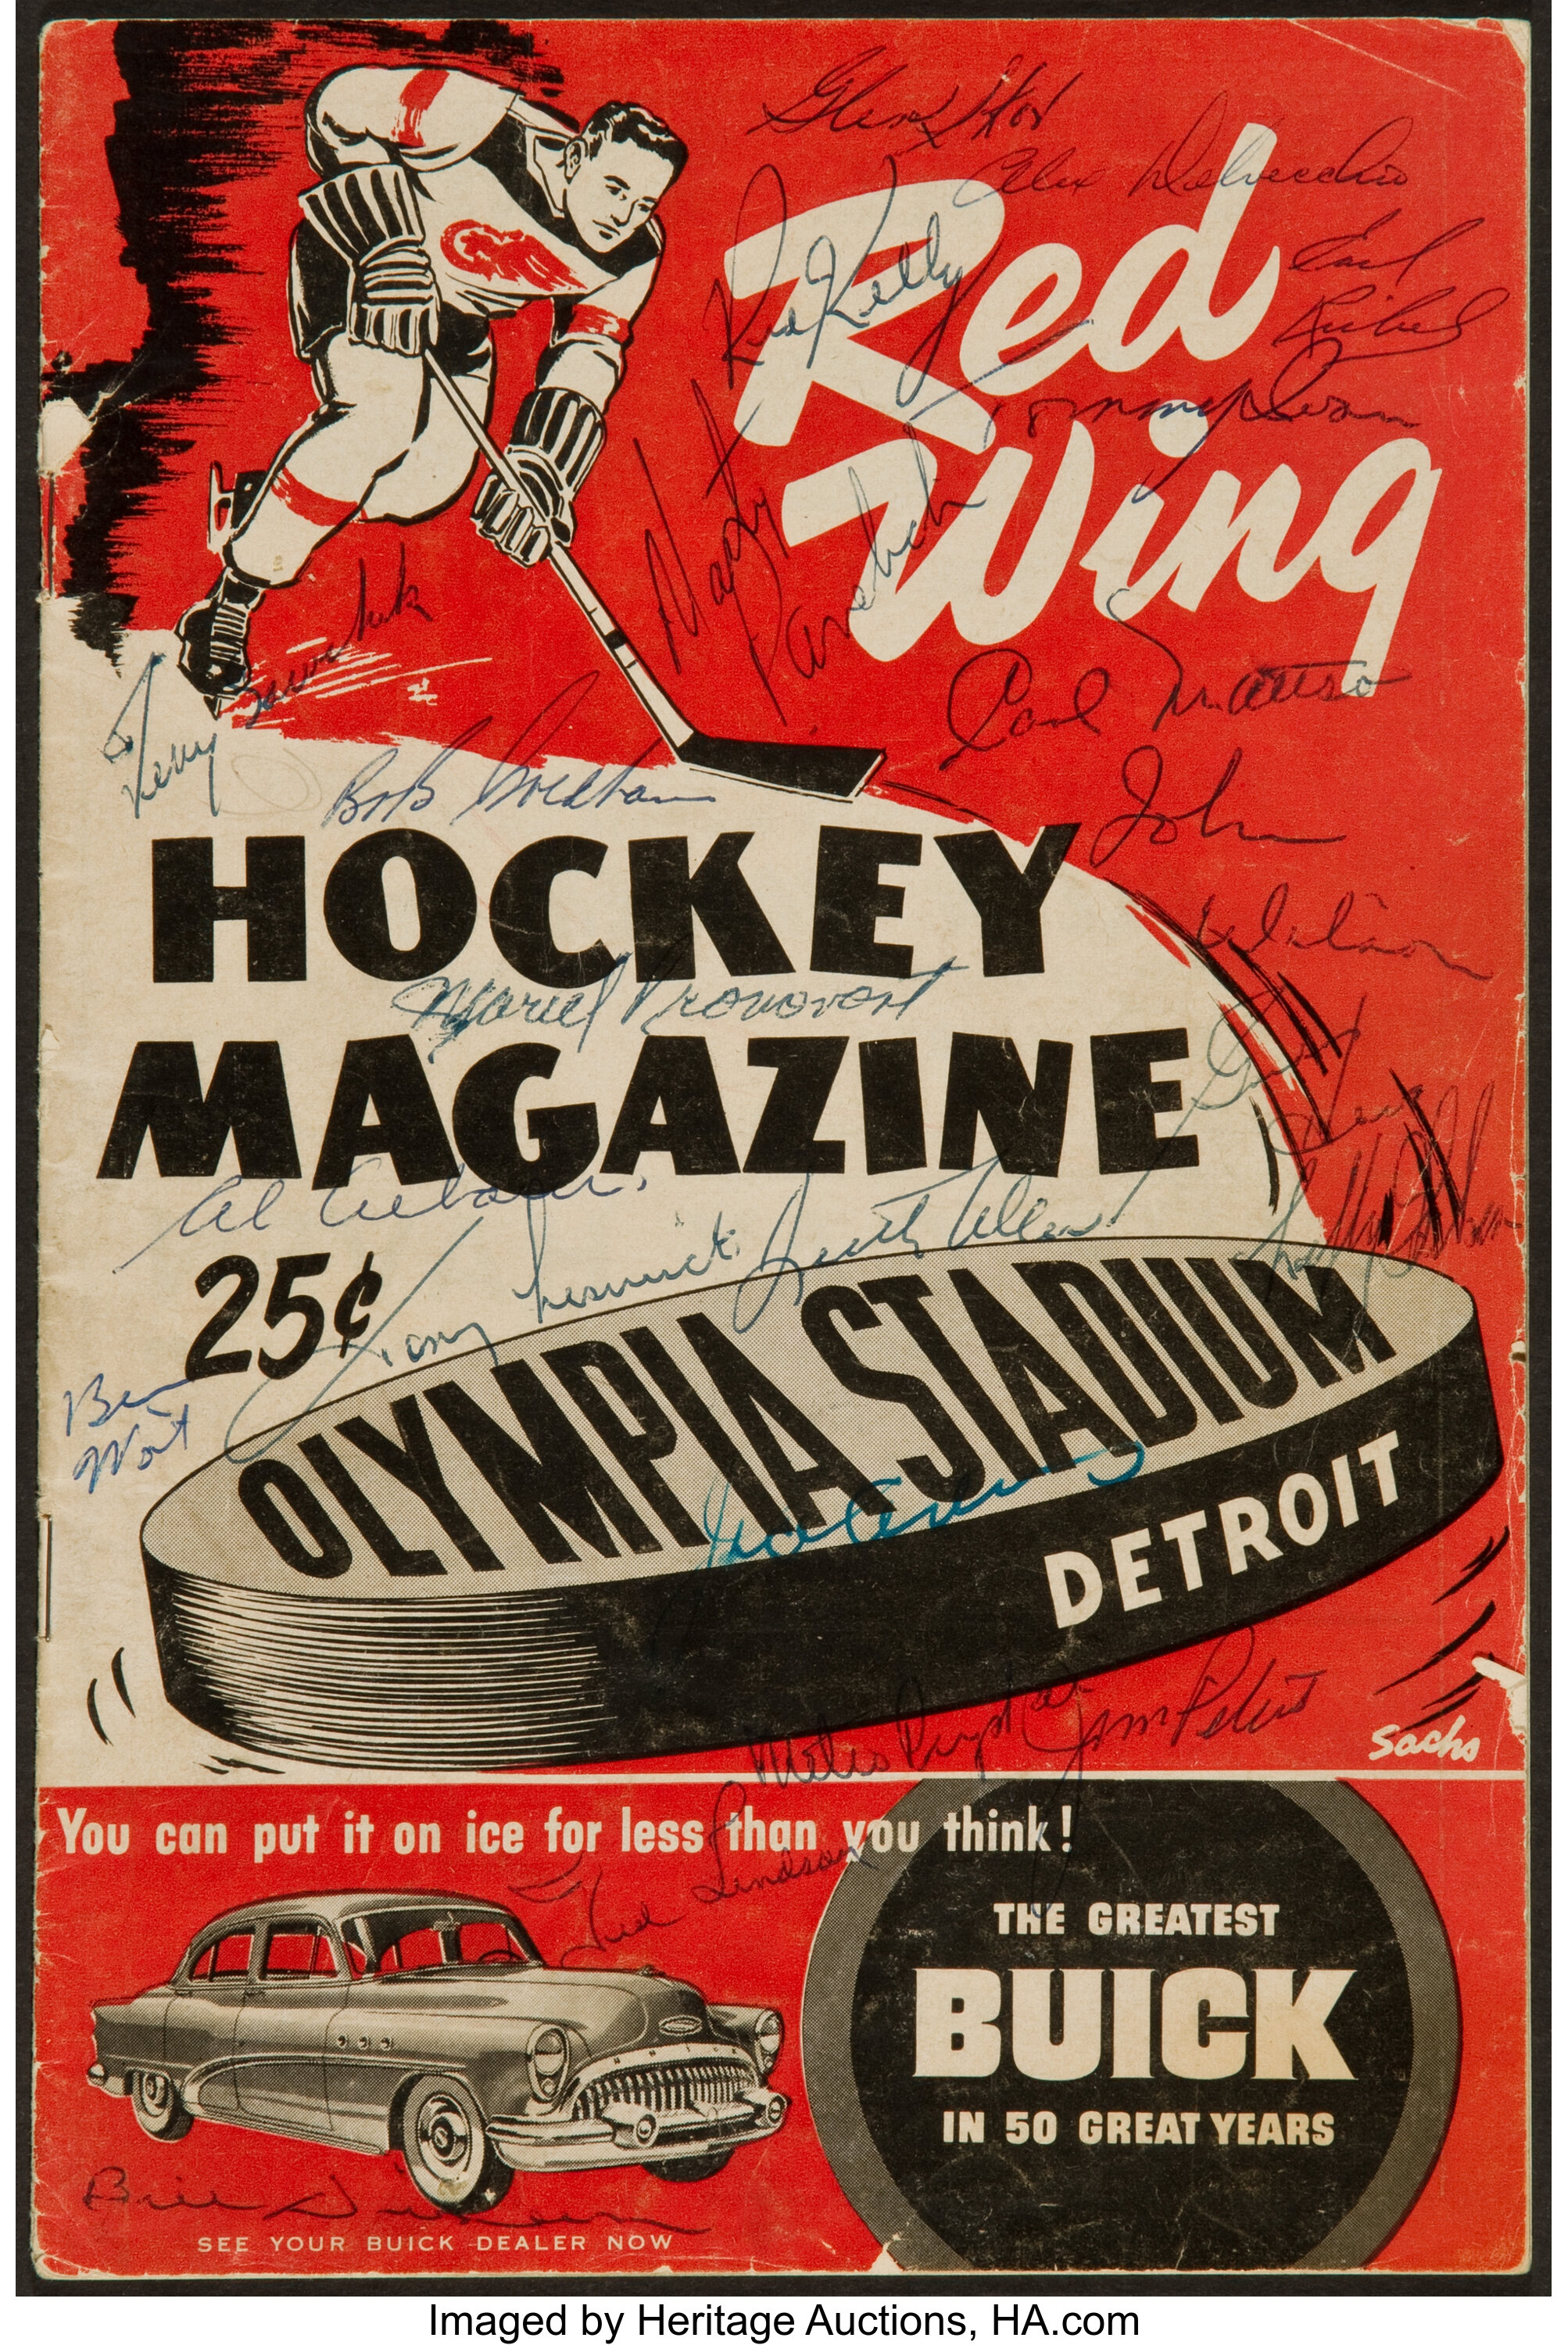 Twenty best nicknames in Red Wings history - Vintage Detroit Collection